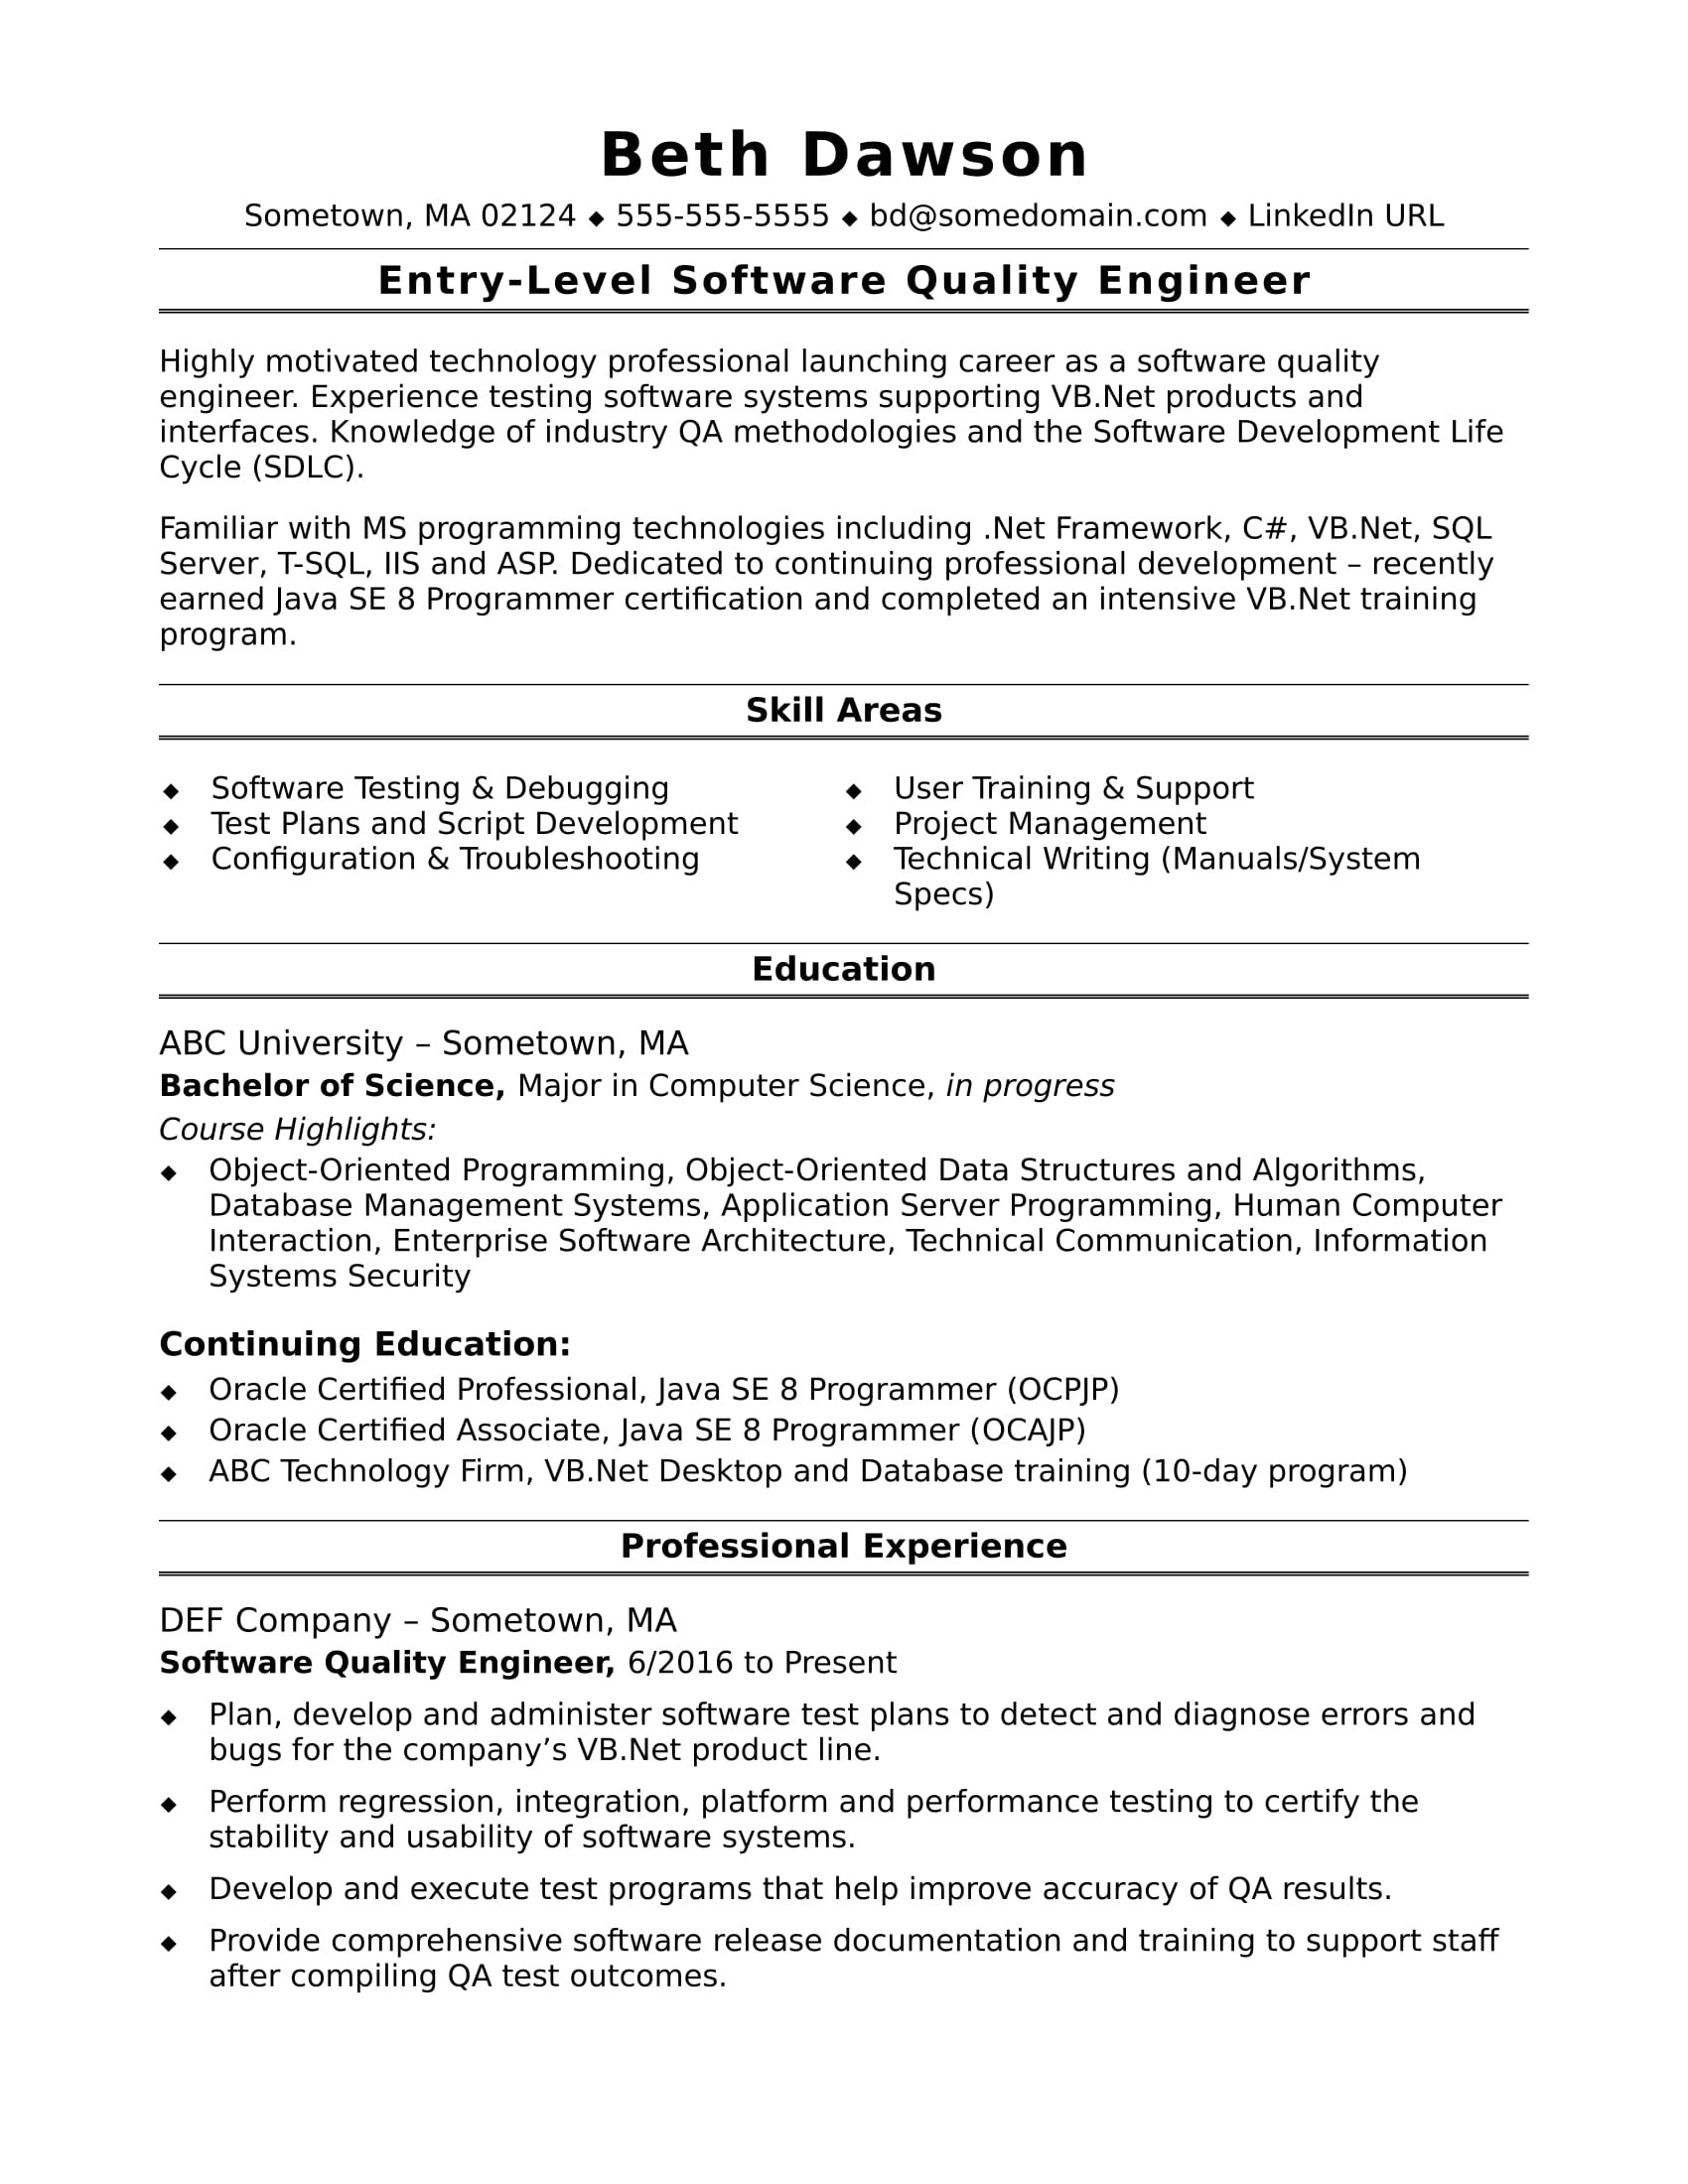 Software Quality assurance Engineer Resume Sample Entry-level Qa Engineer Resume Monster.com